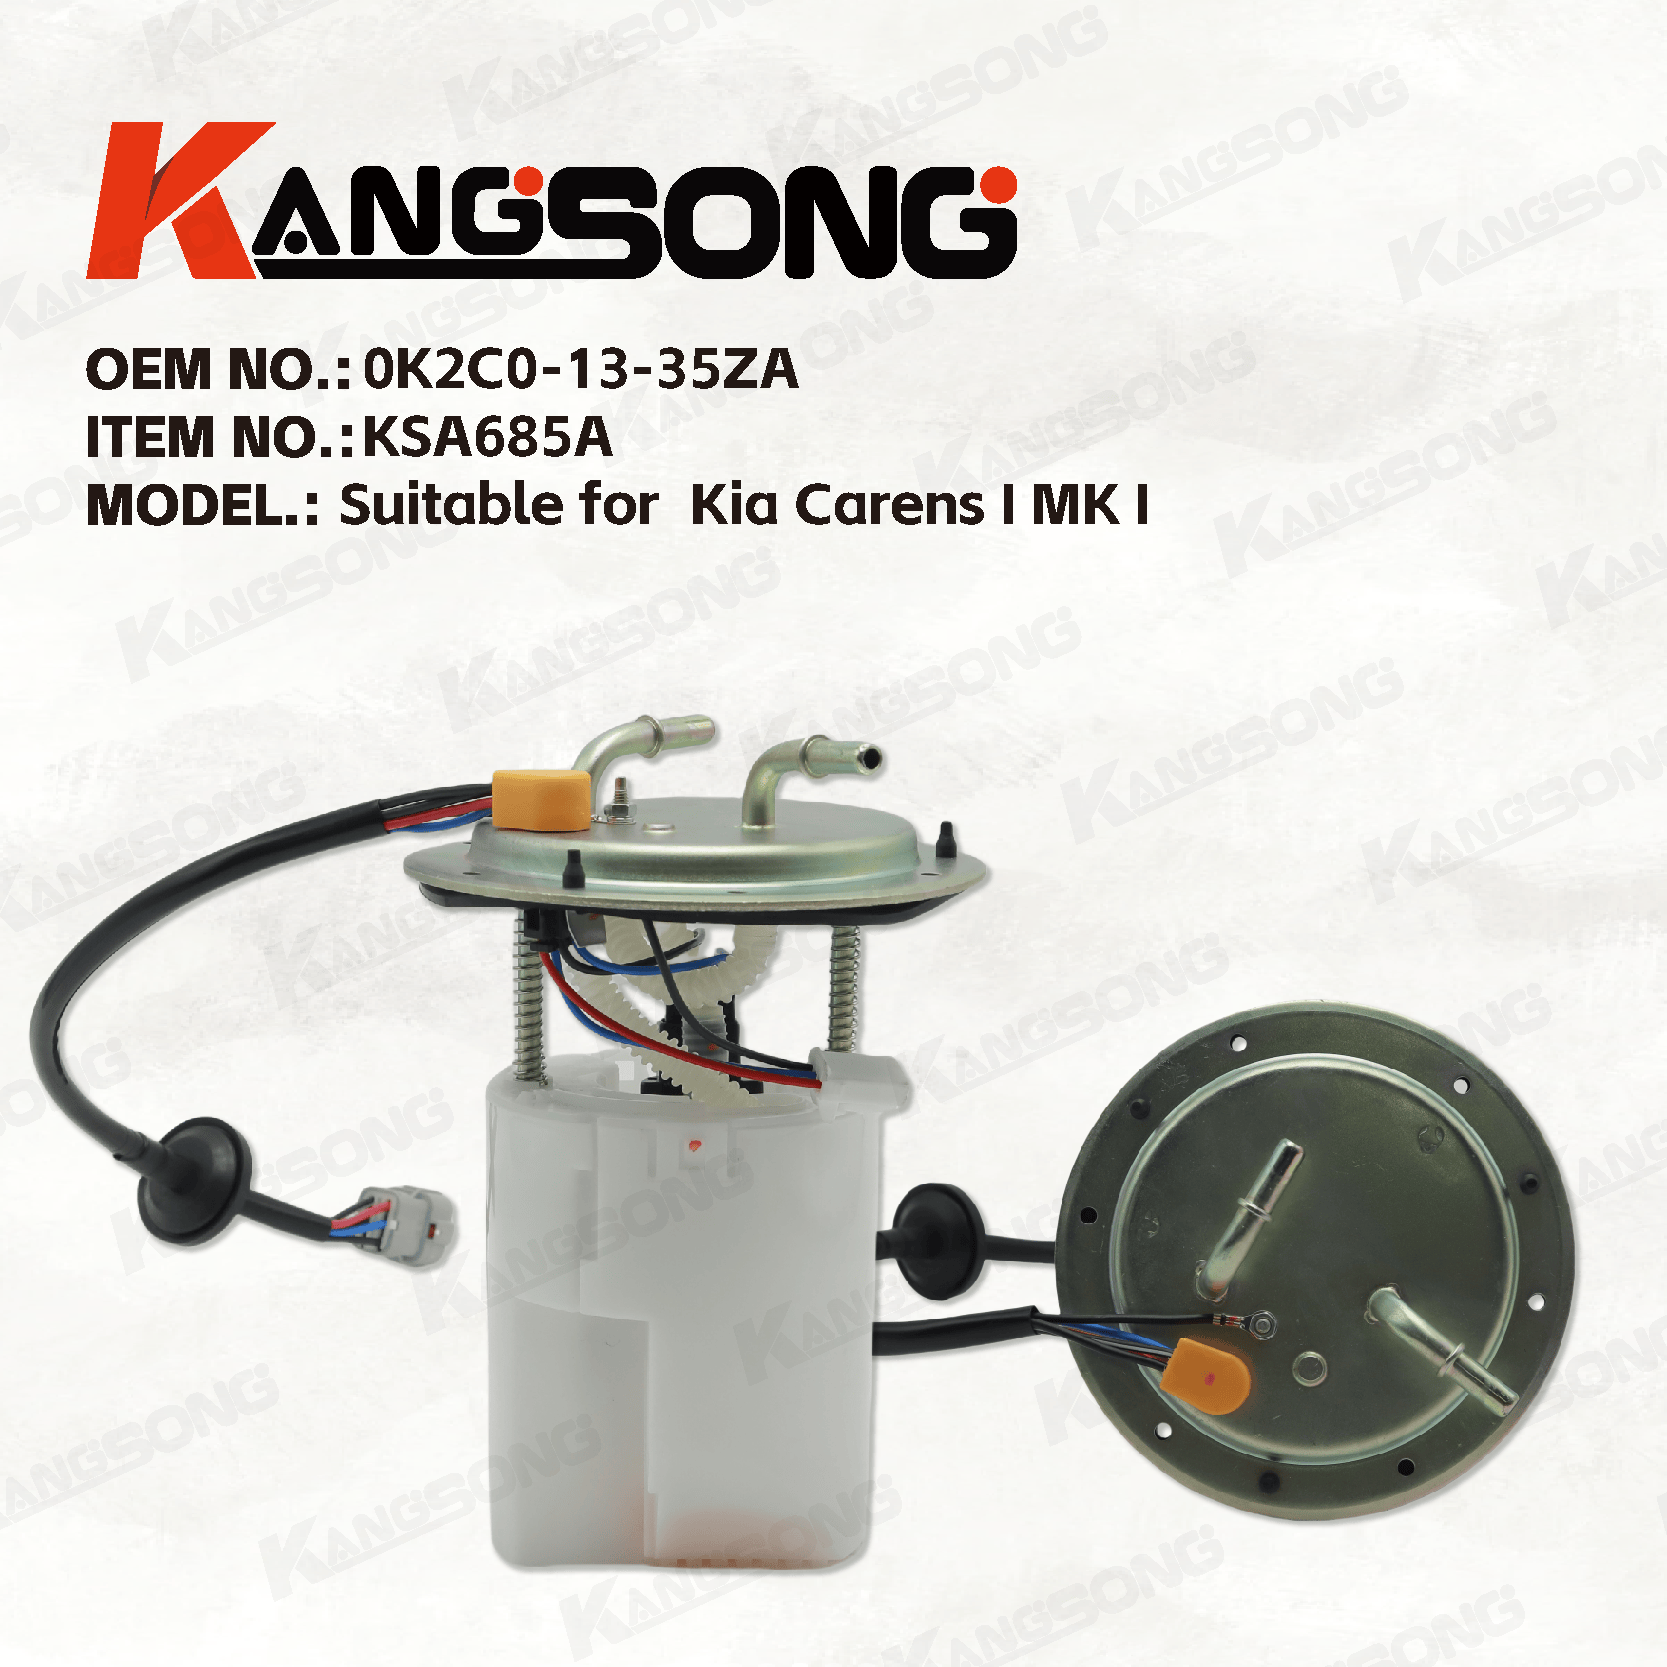 Applicable to Kia Carens I MK I /0K2C0-13-35ZA/Fuel Pump Assembly/KSA685A